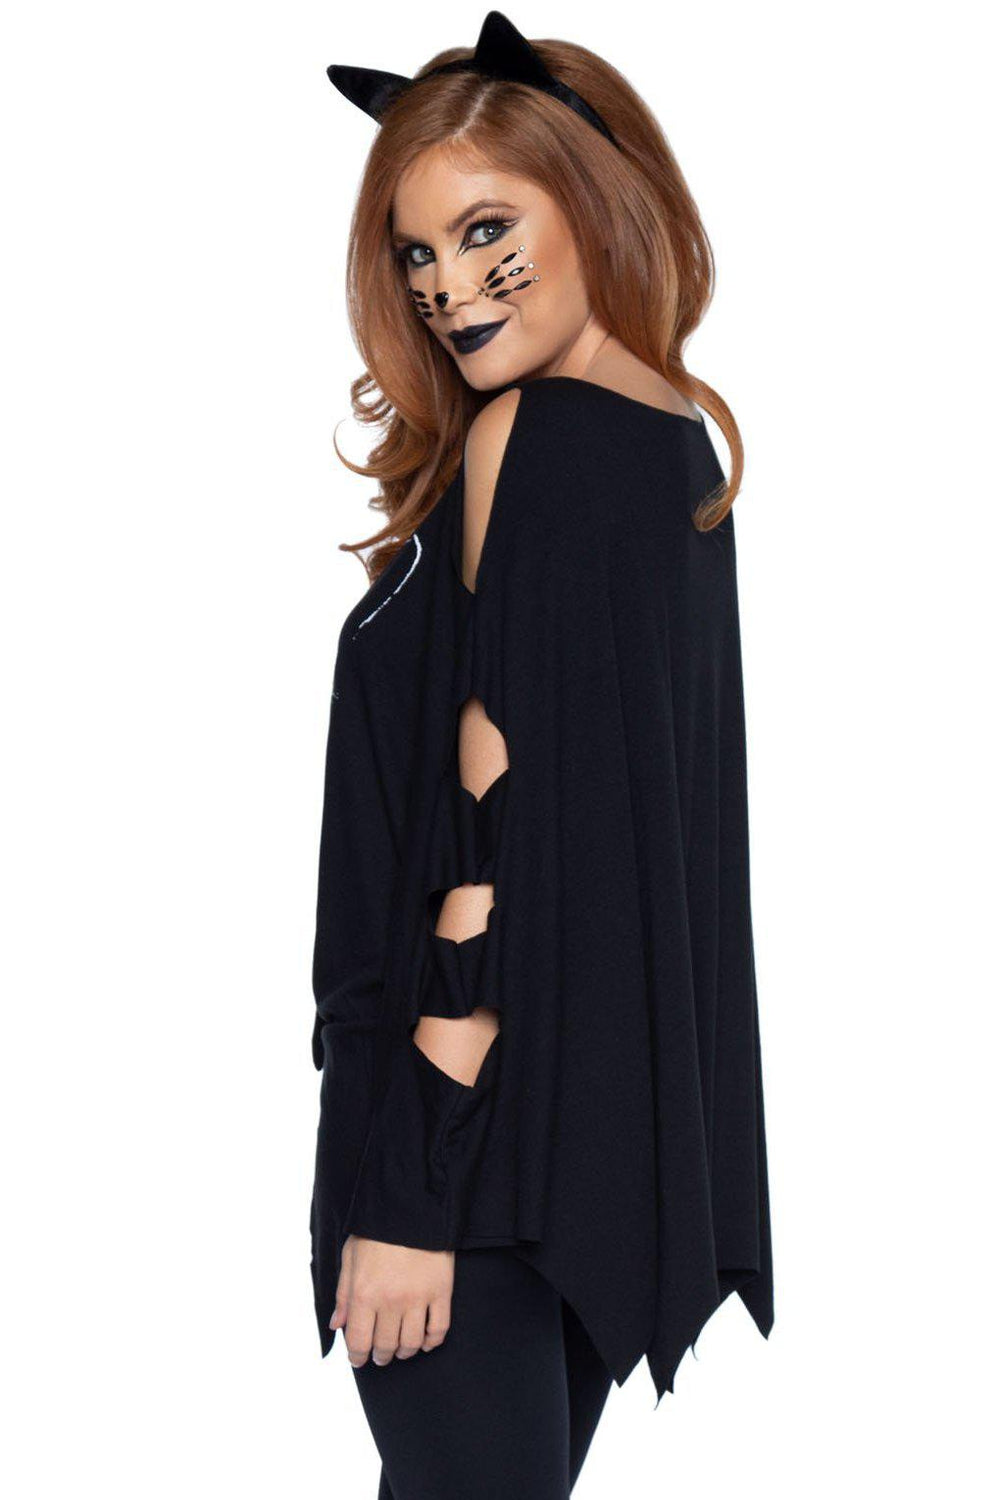 Cat Poncho Costume-Animal Costumes-Leg Avenue-Black-O/S-SEXYSHOES.COM